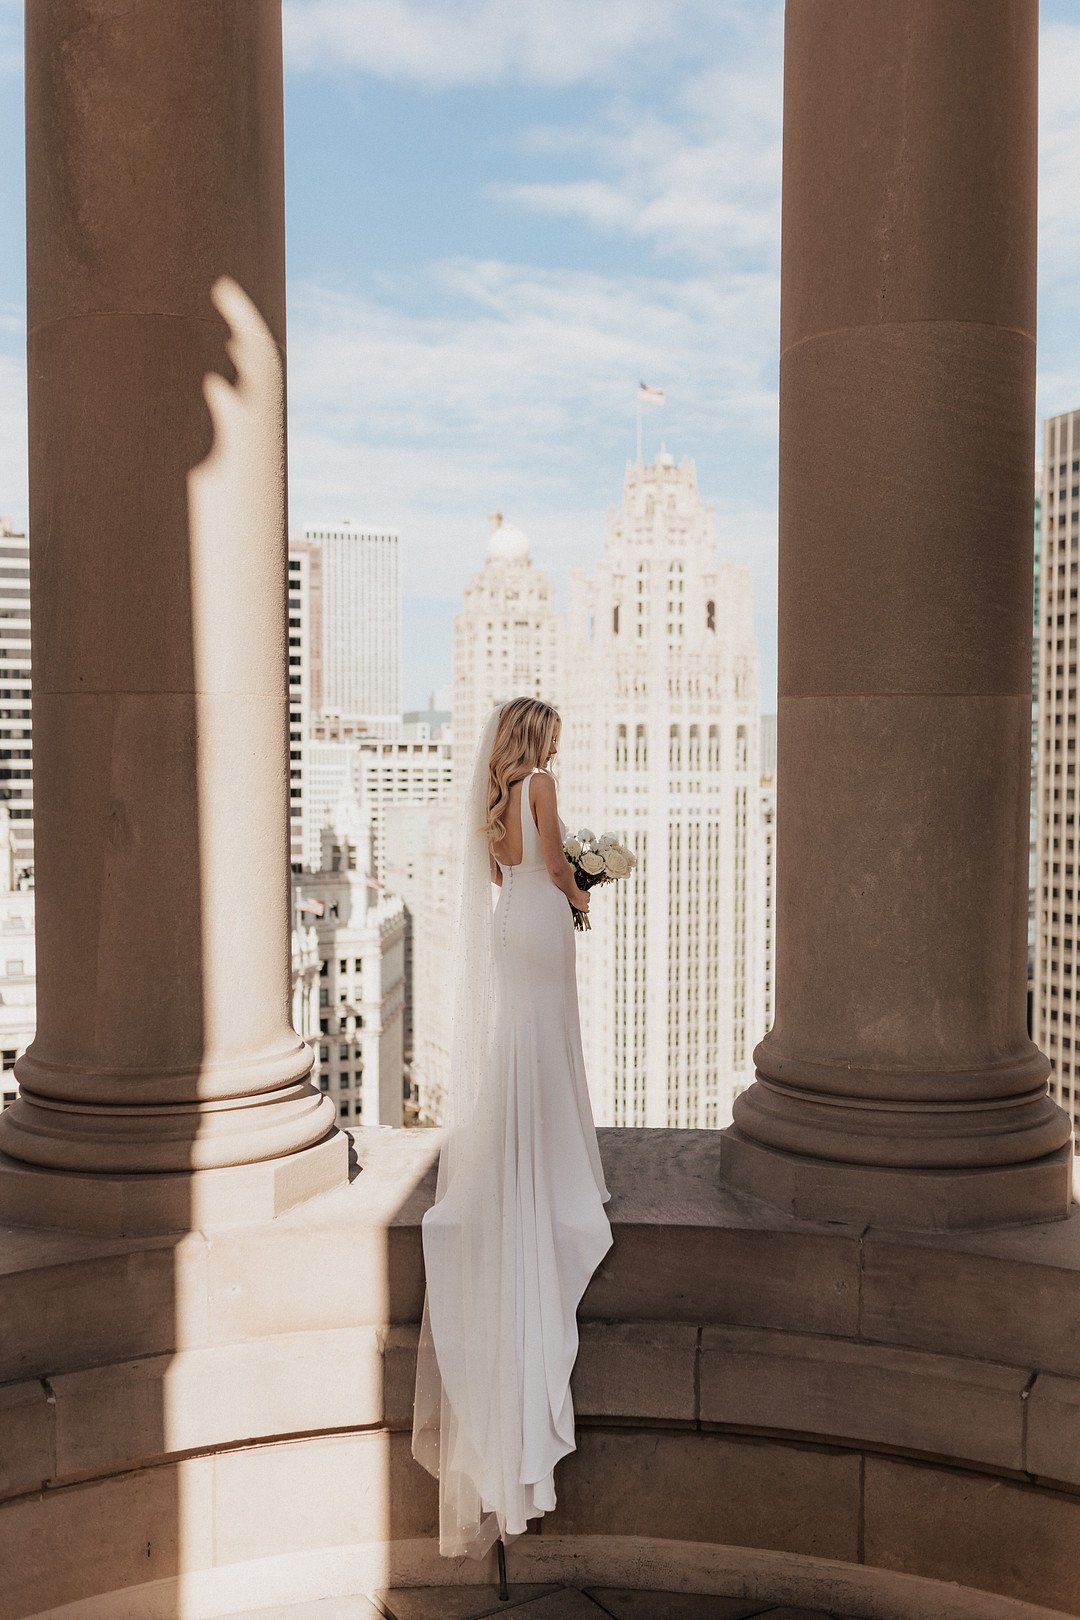 Wigal_Wigal_Nicole Ryann Photography_Intimate Chicago Rooftop Wedding - Nicole Ryann Photography-504_low.jpg